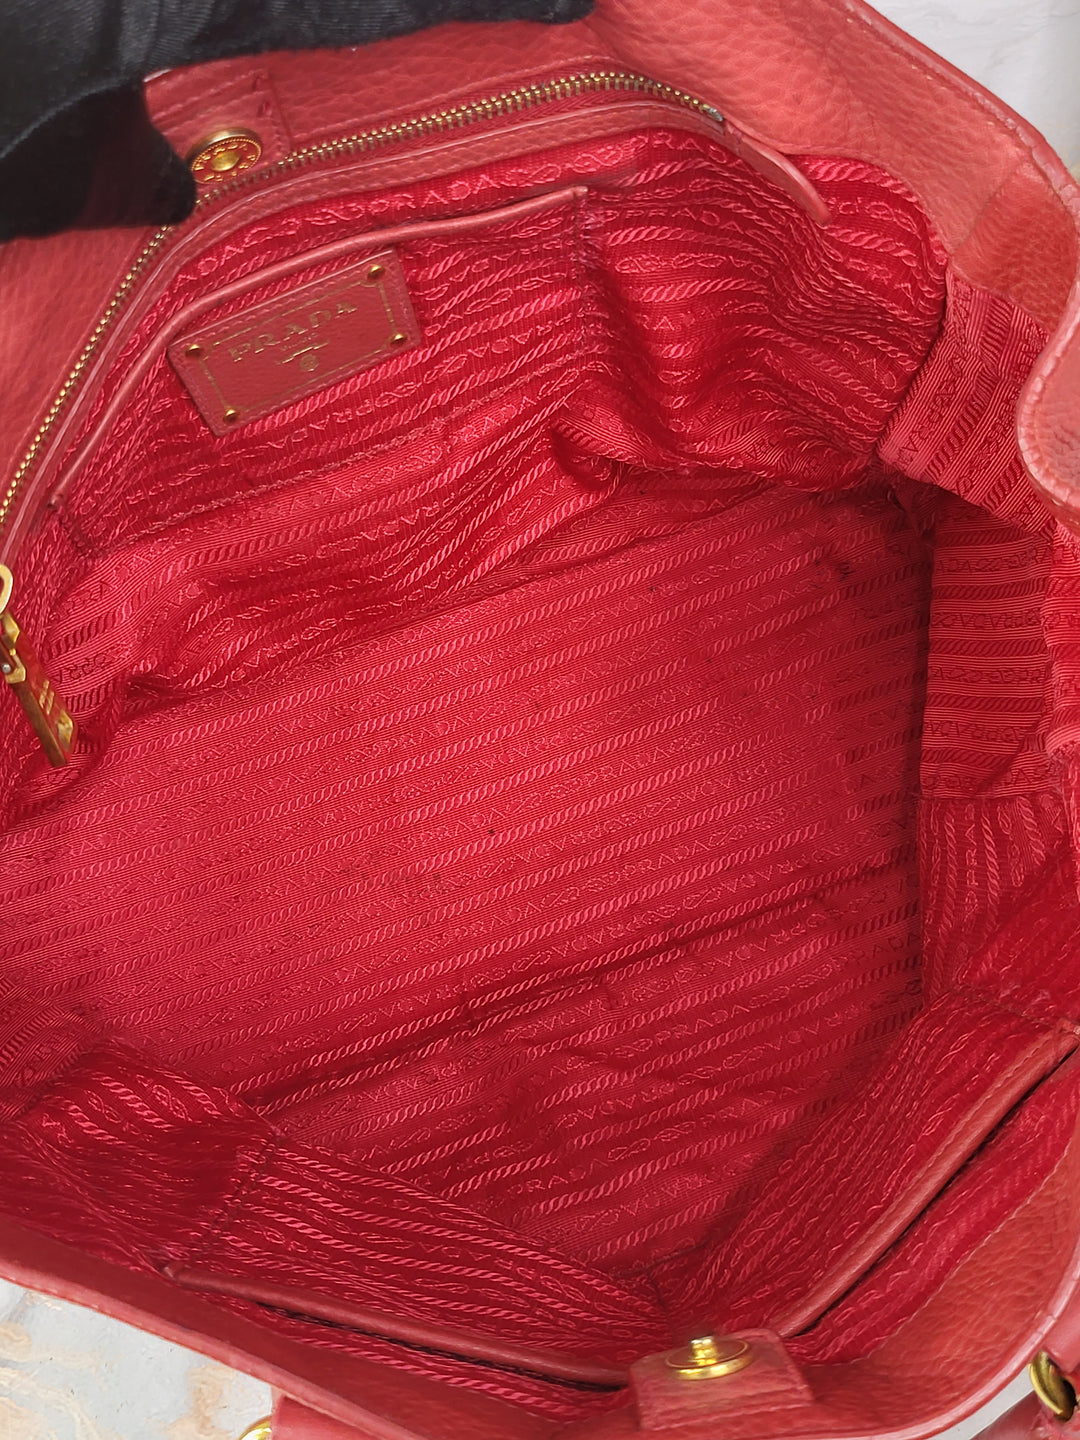 Prada Daino Leather Tote Bag